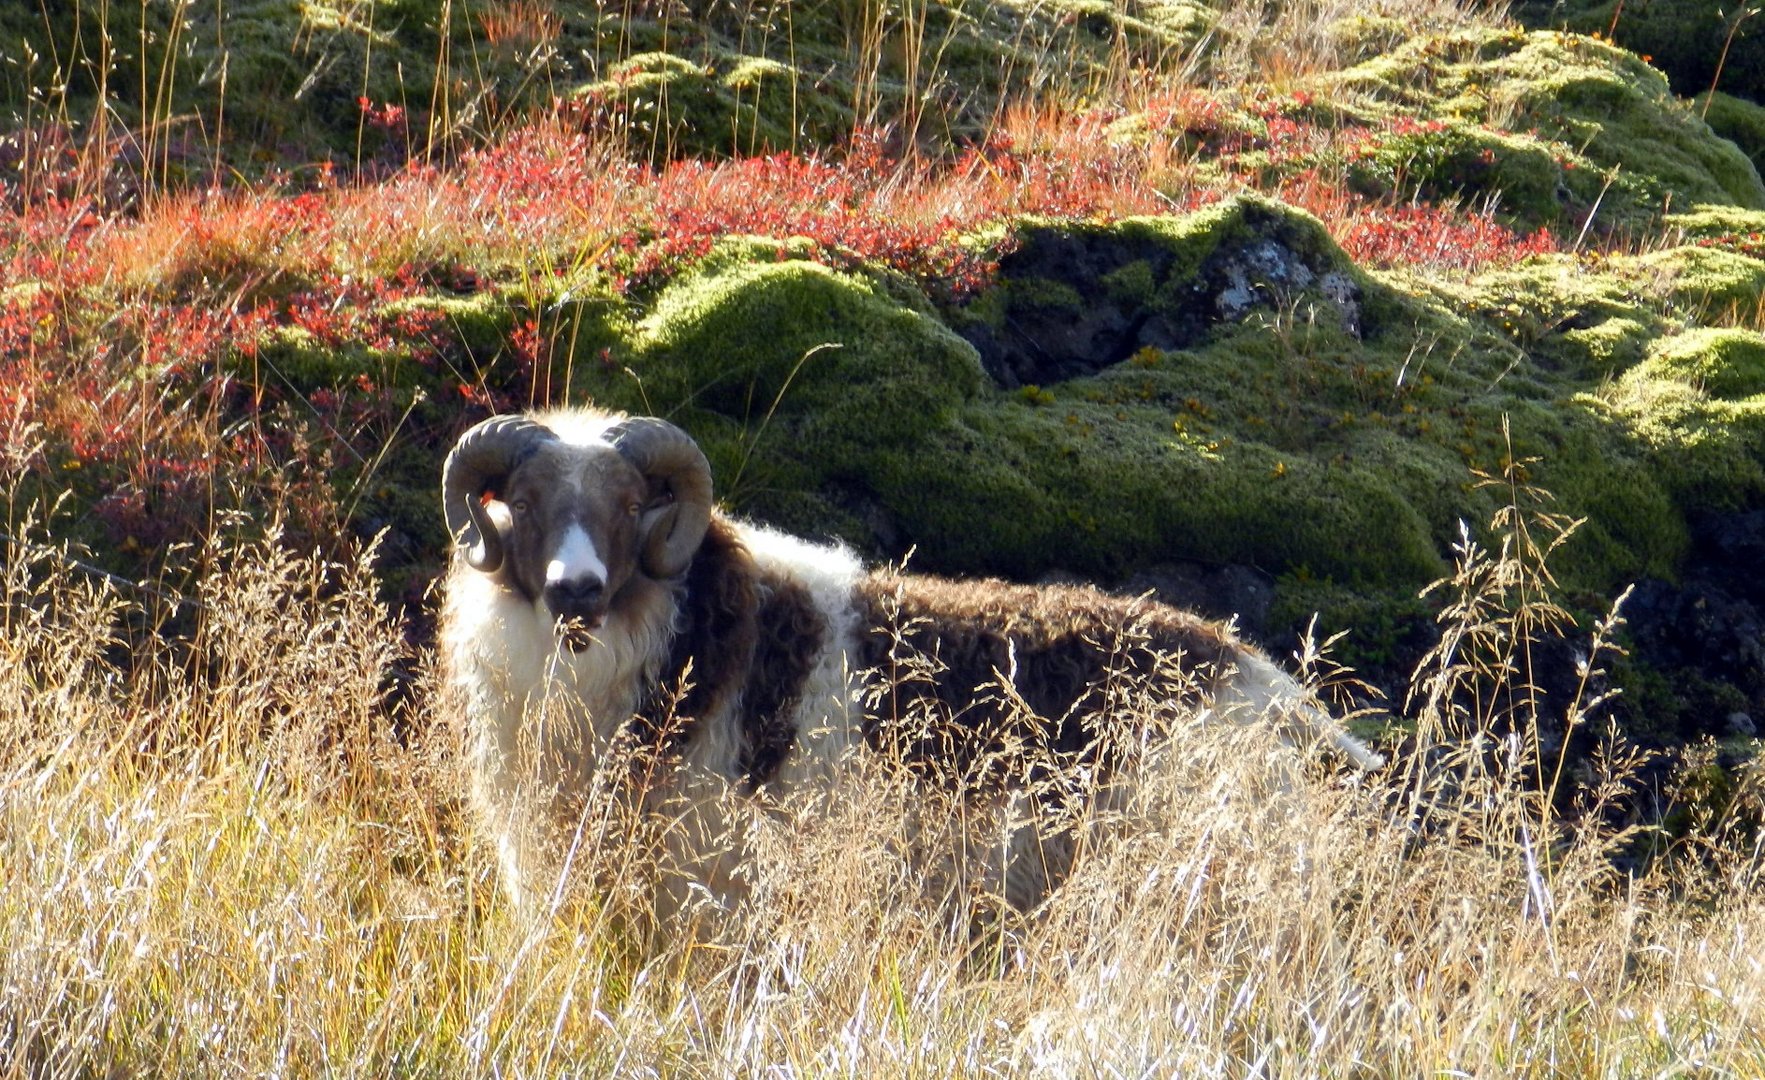 "The Icelandic killer sheep"